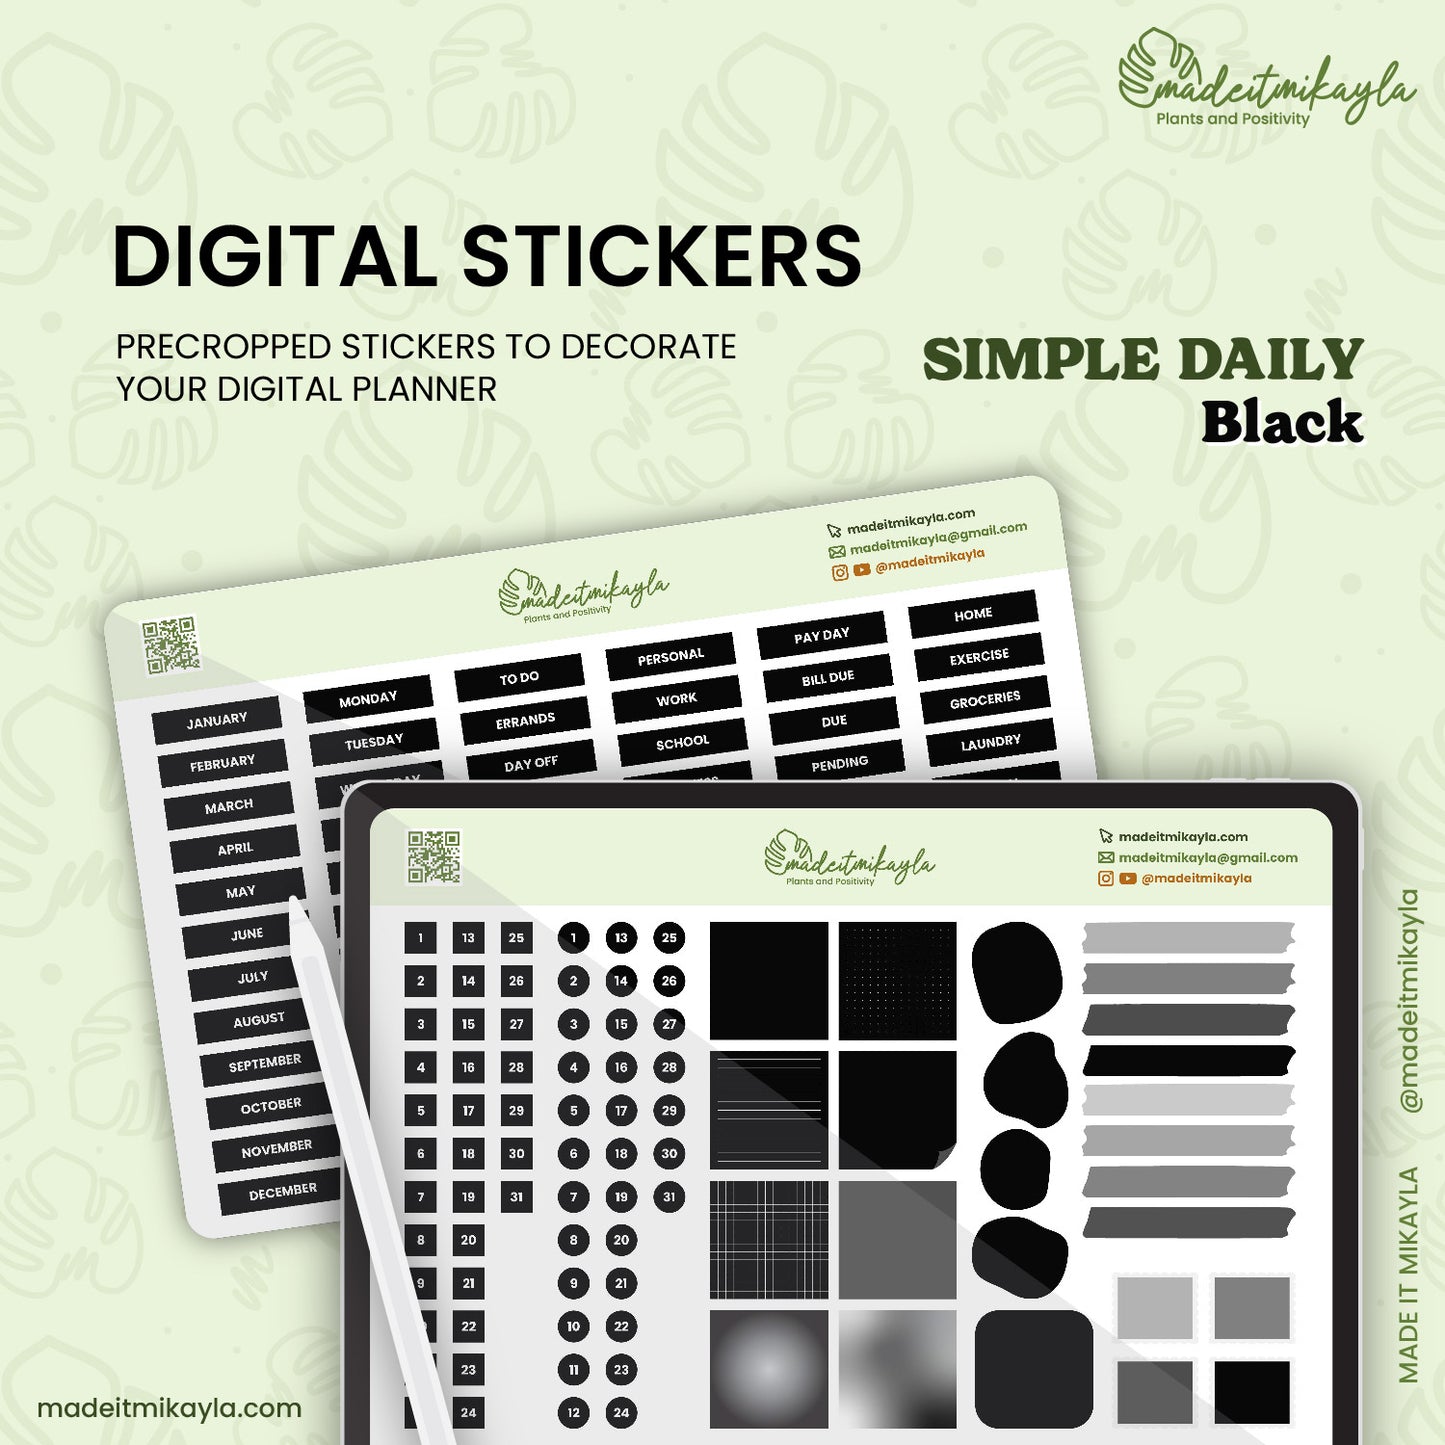 Black Simple Daily Digital Stickers | MadeItMikayla